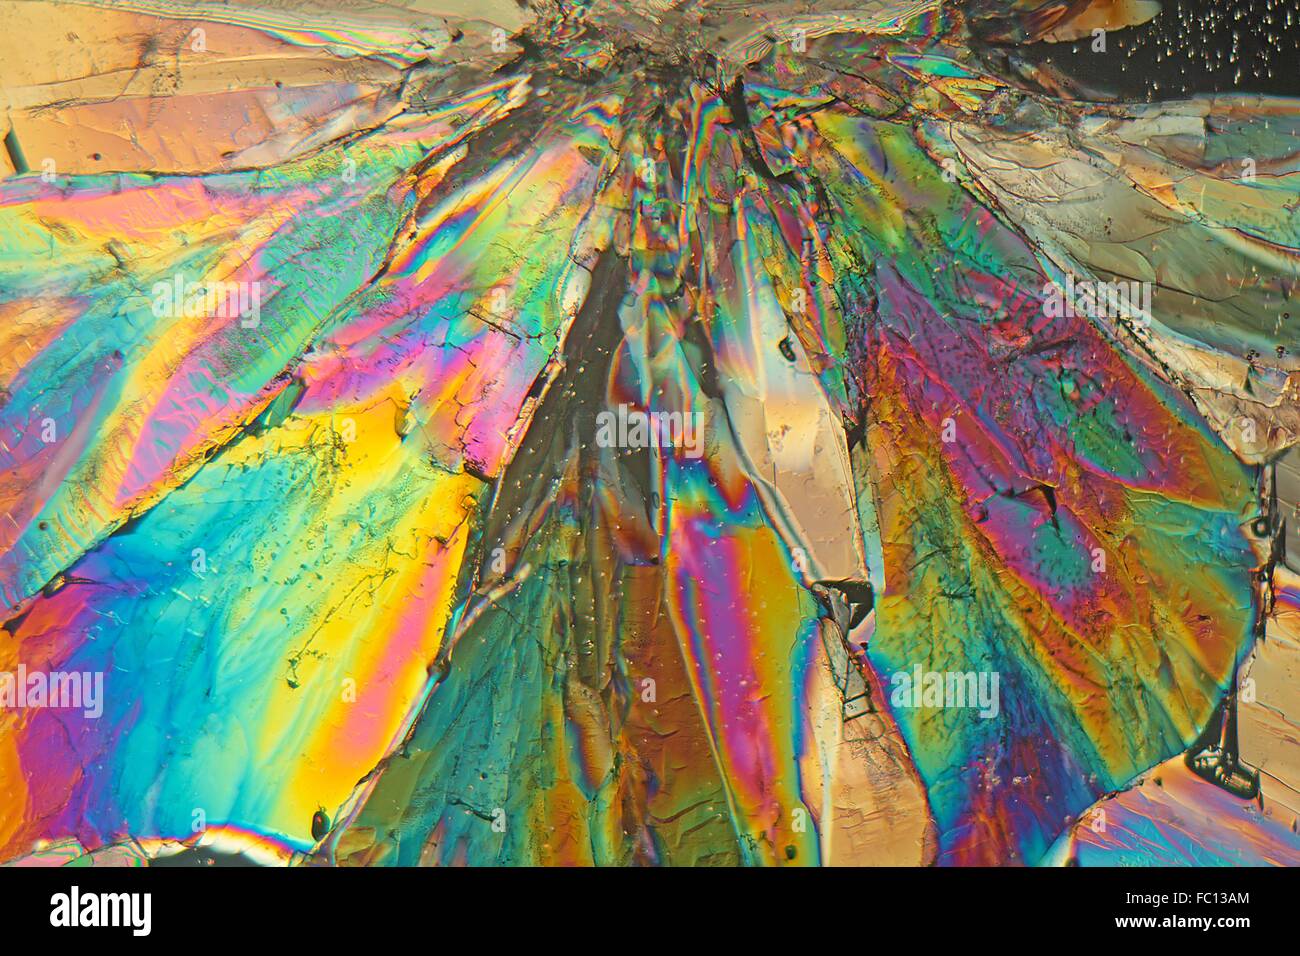 Zuckerkristalle unter dem Mikroskop Stockfotografie - Alamy